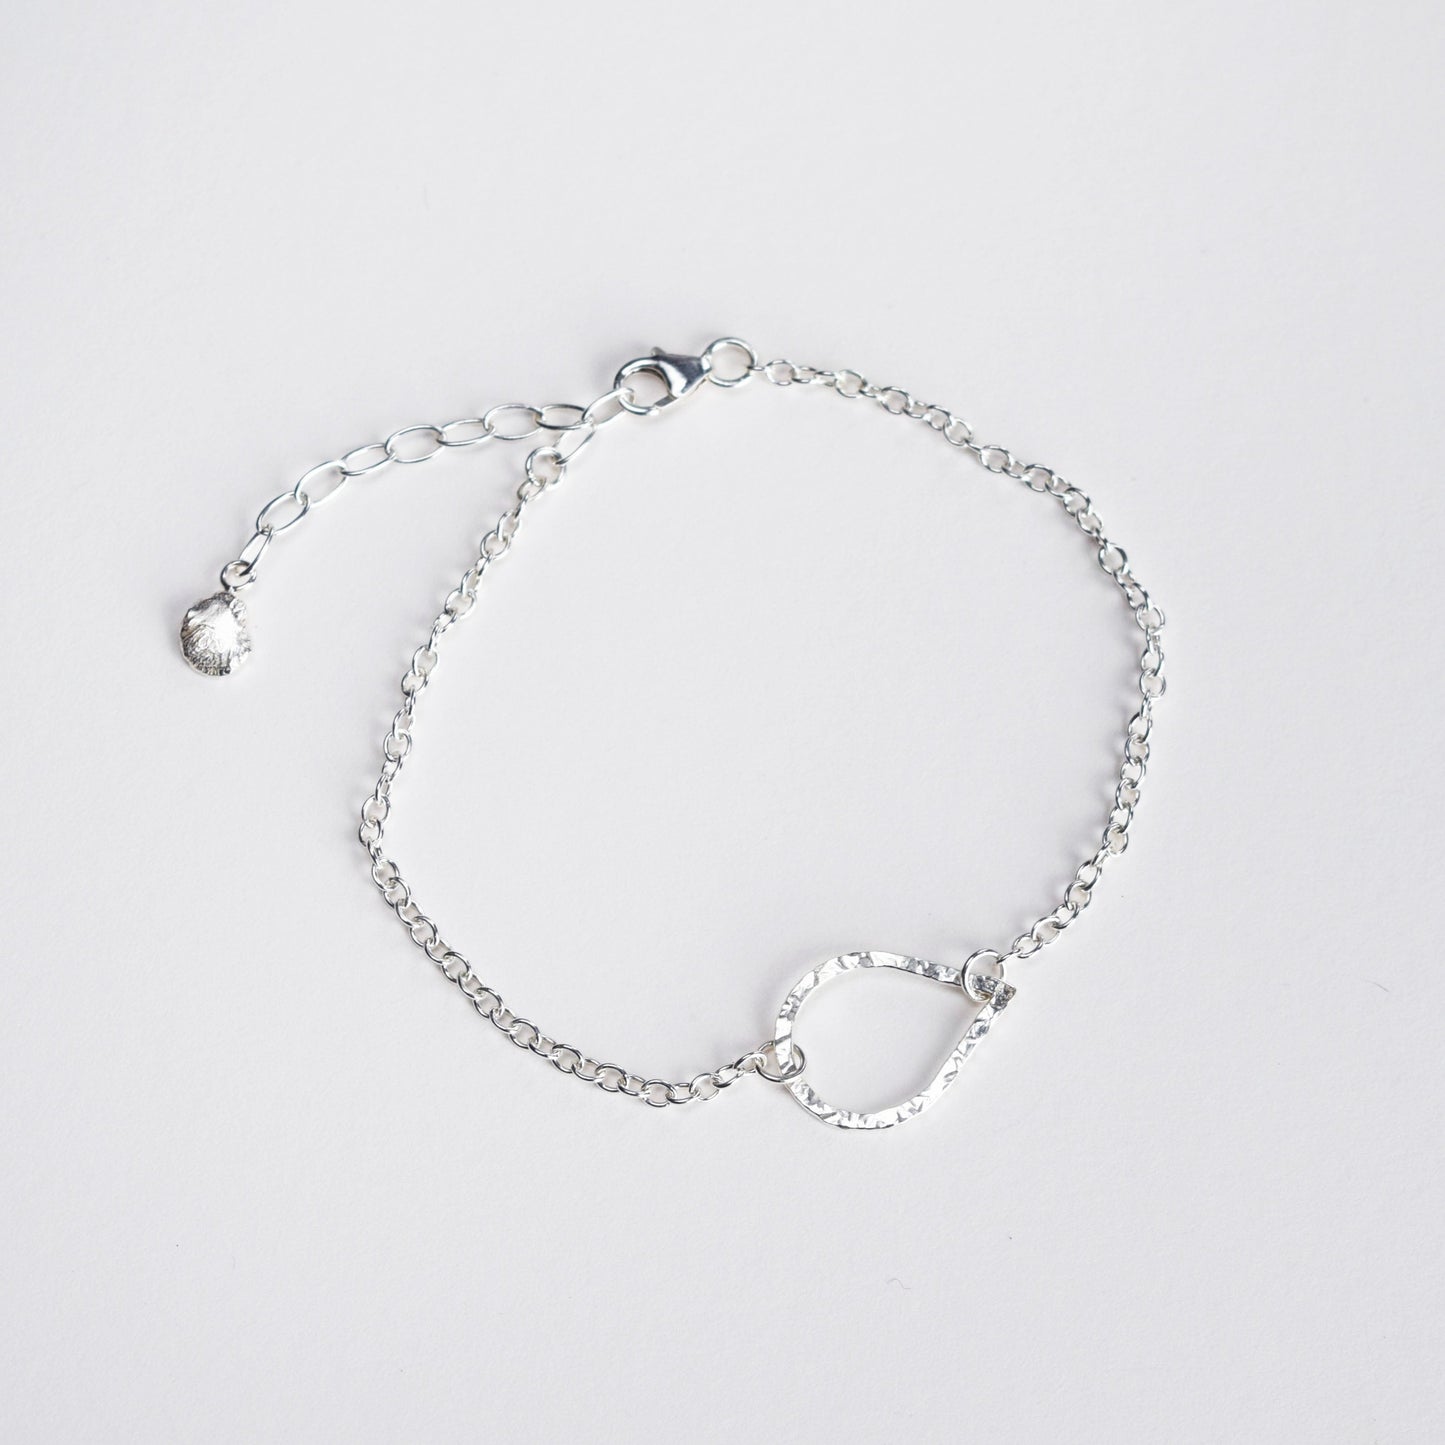 Silver teardrop bracelet on white background